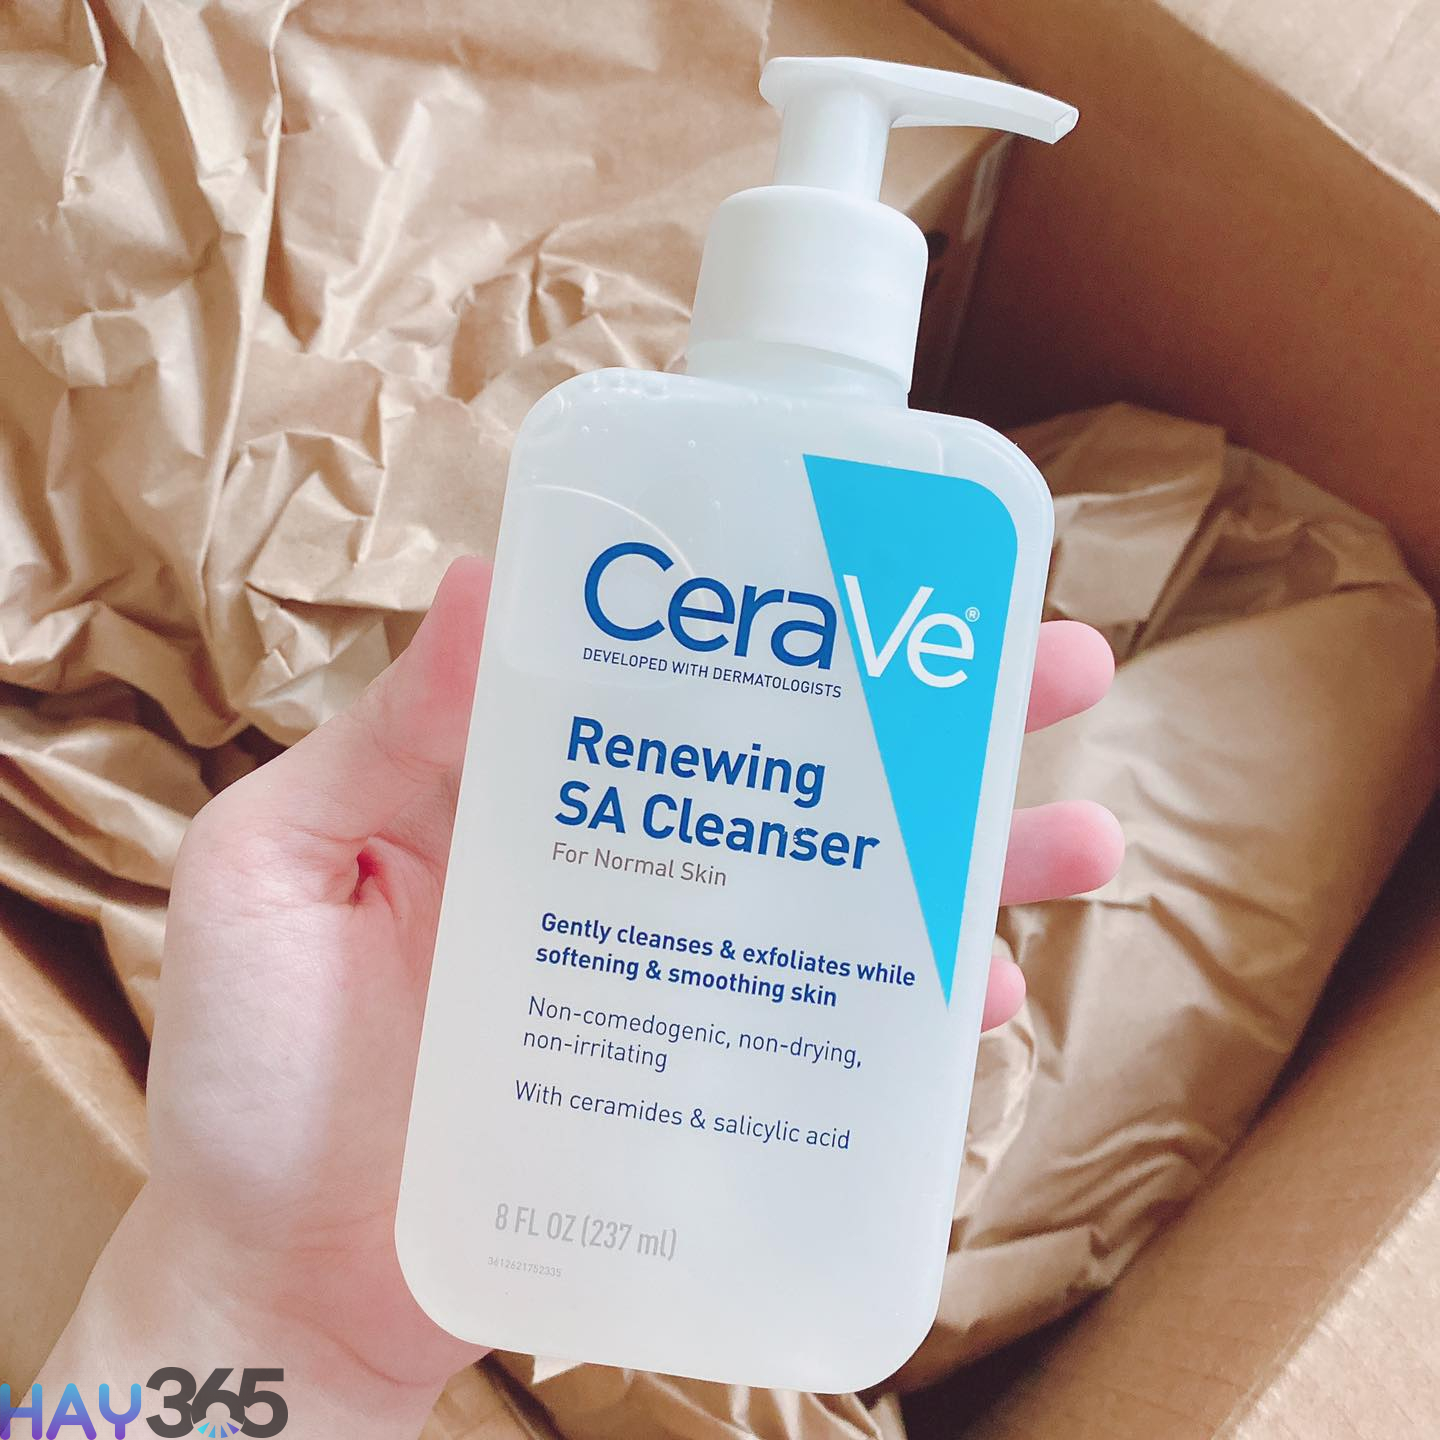 ữa rửa mặt Cerave Renewing SA Cleanser